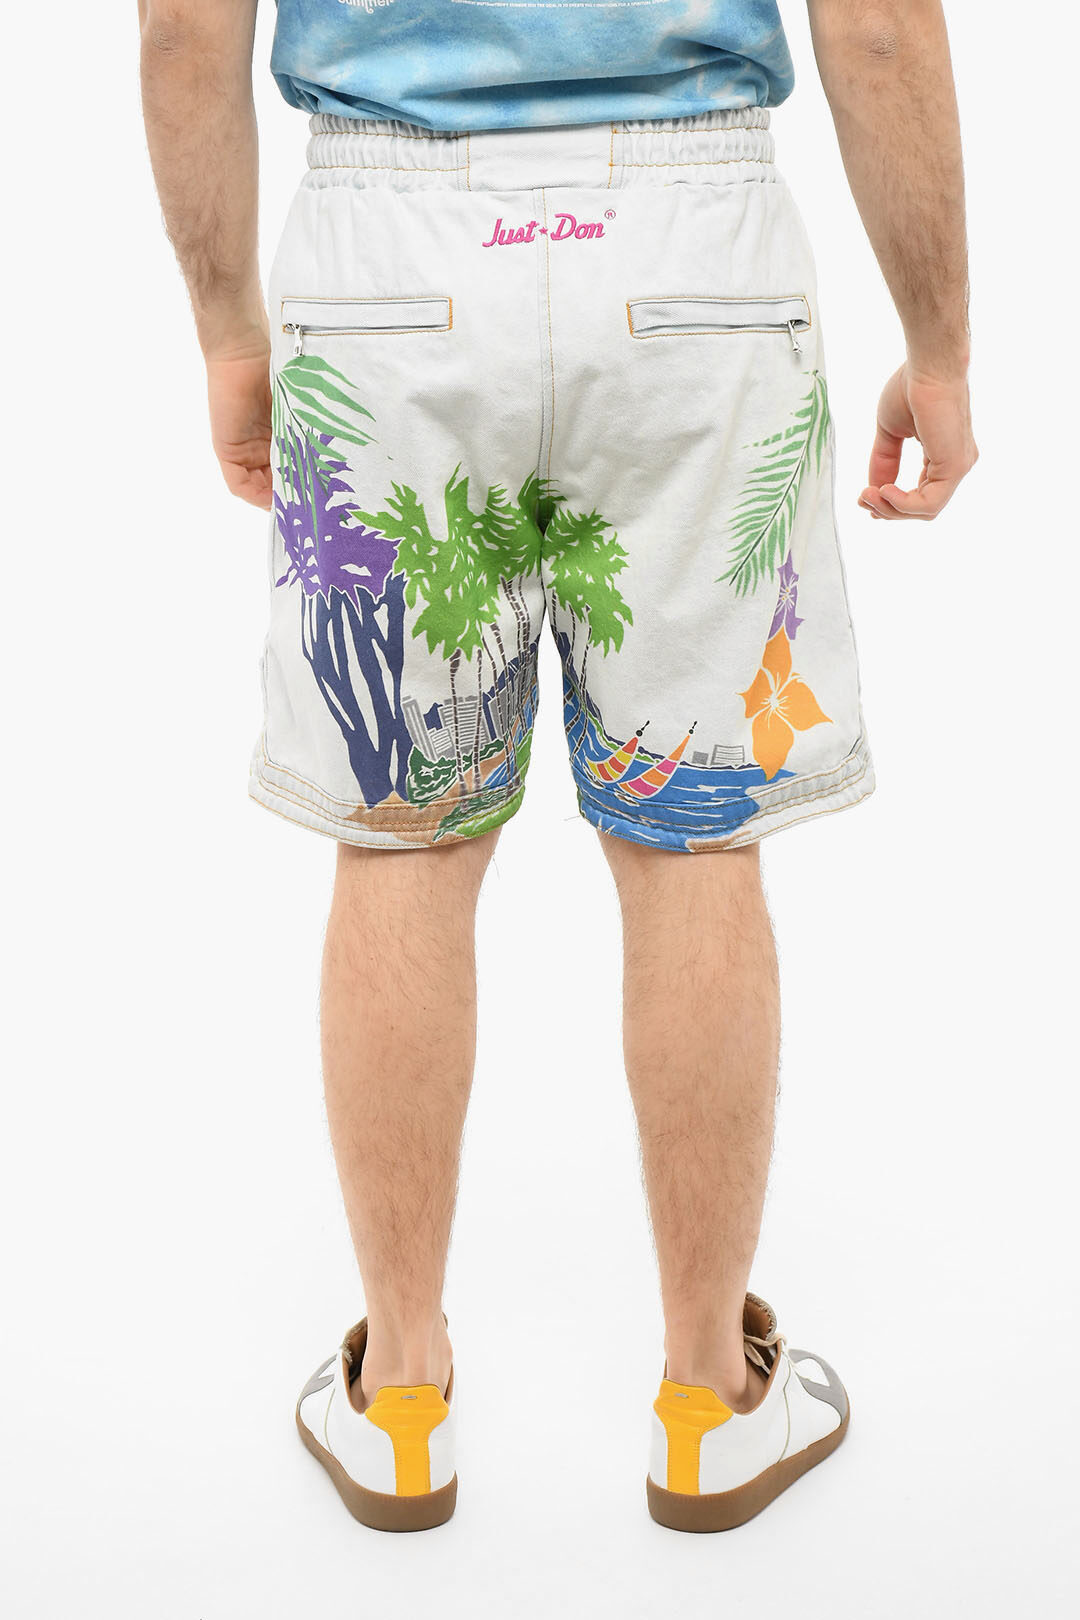 Flikkeren zoogdier park Just Don ISLANDERS Denim HAWAII Shorts with Drawstring men - Glamood Outlet